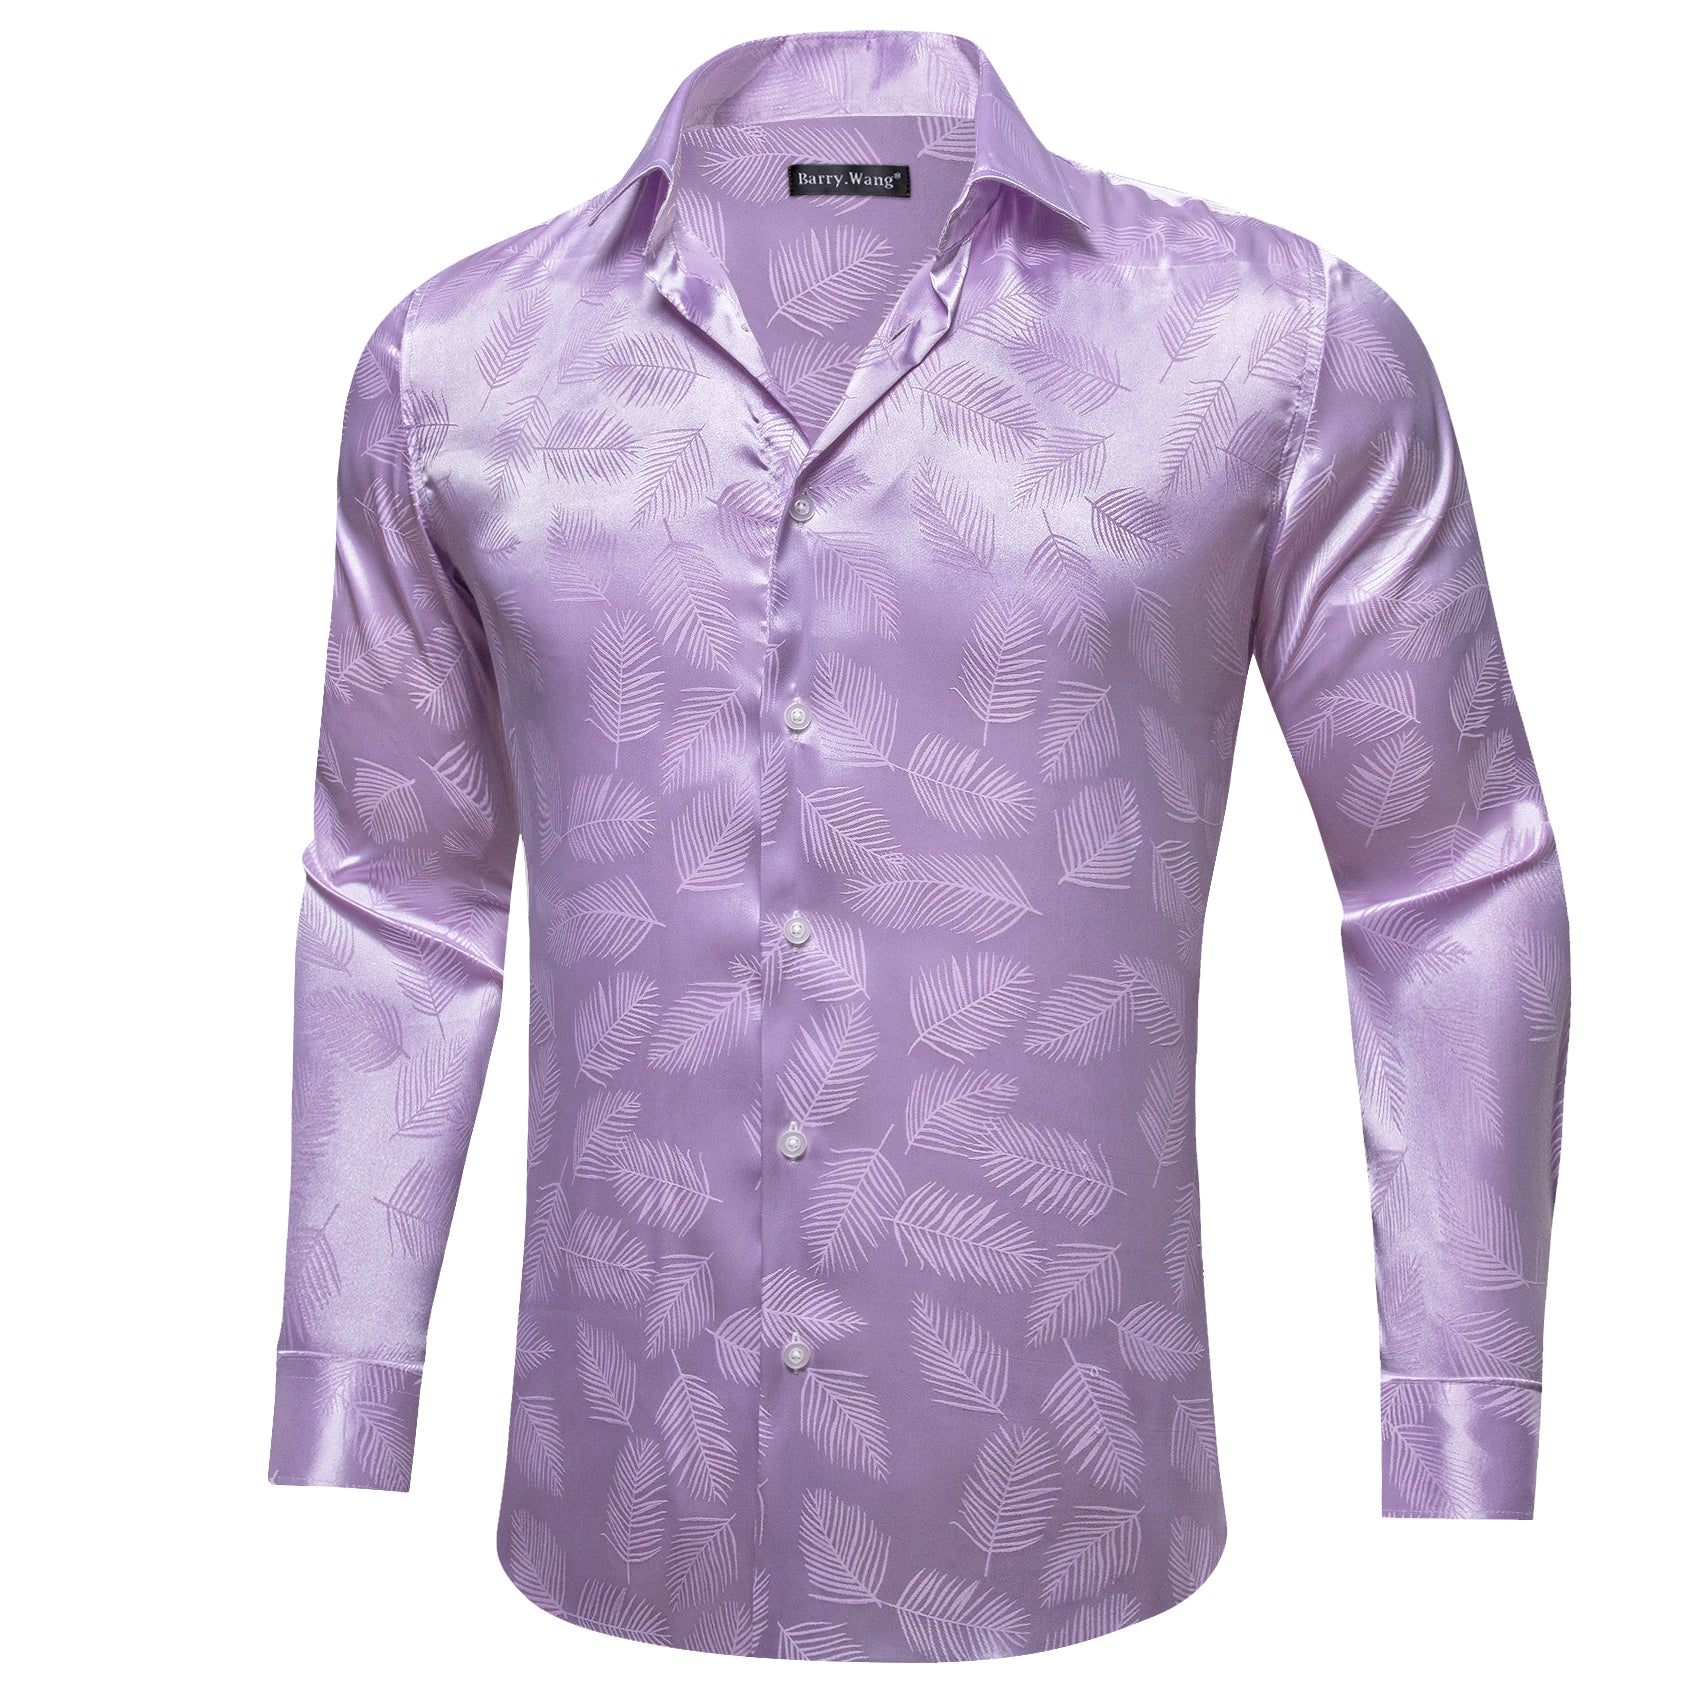 Barry.wang Purple Feather Floral Silk Men's Shirt